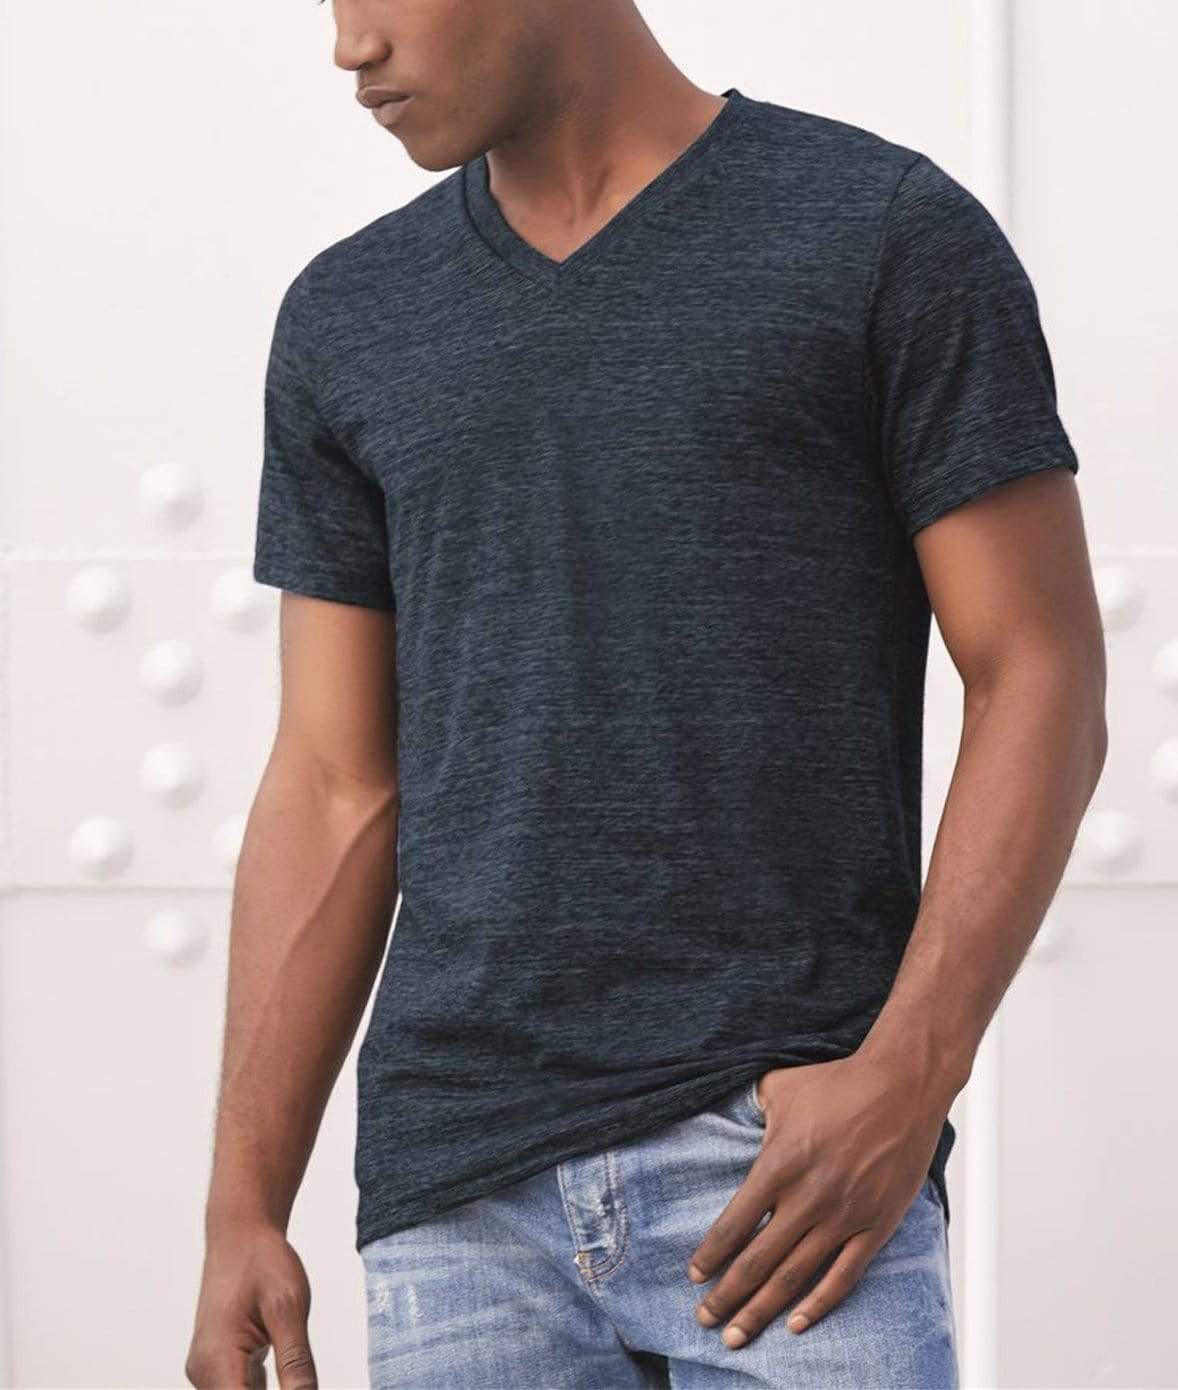 Men's Short Sleeve Slub Jersey V-Neck T-Shirt Worn by Model